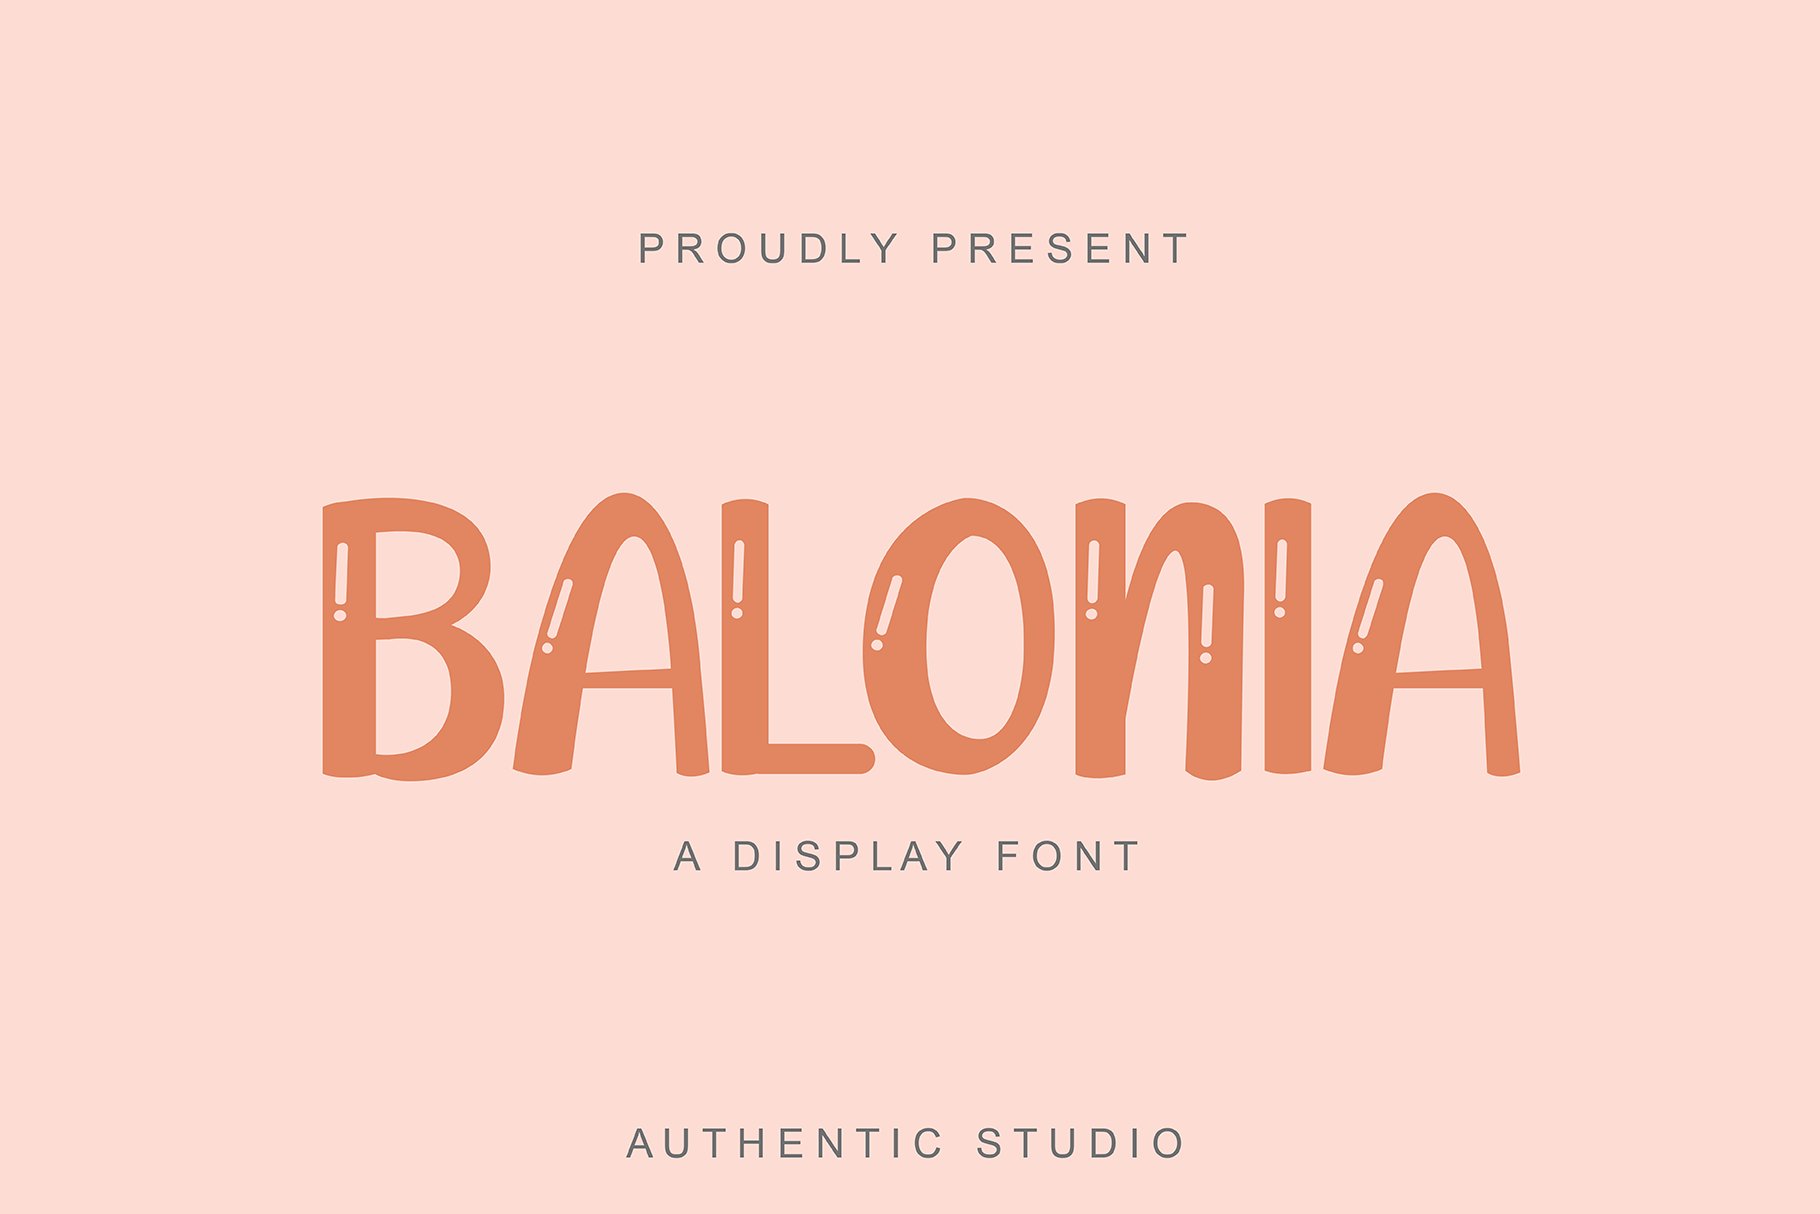 Balonia cover image.